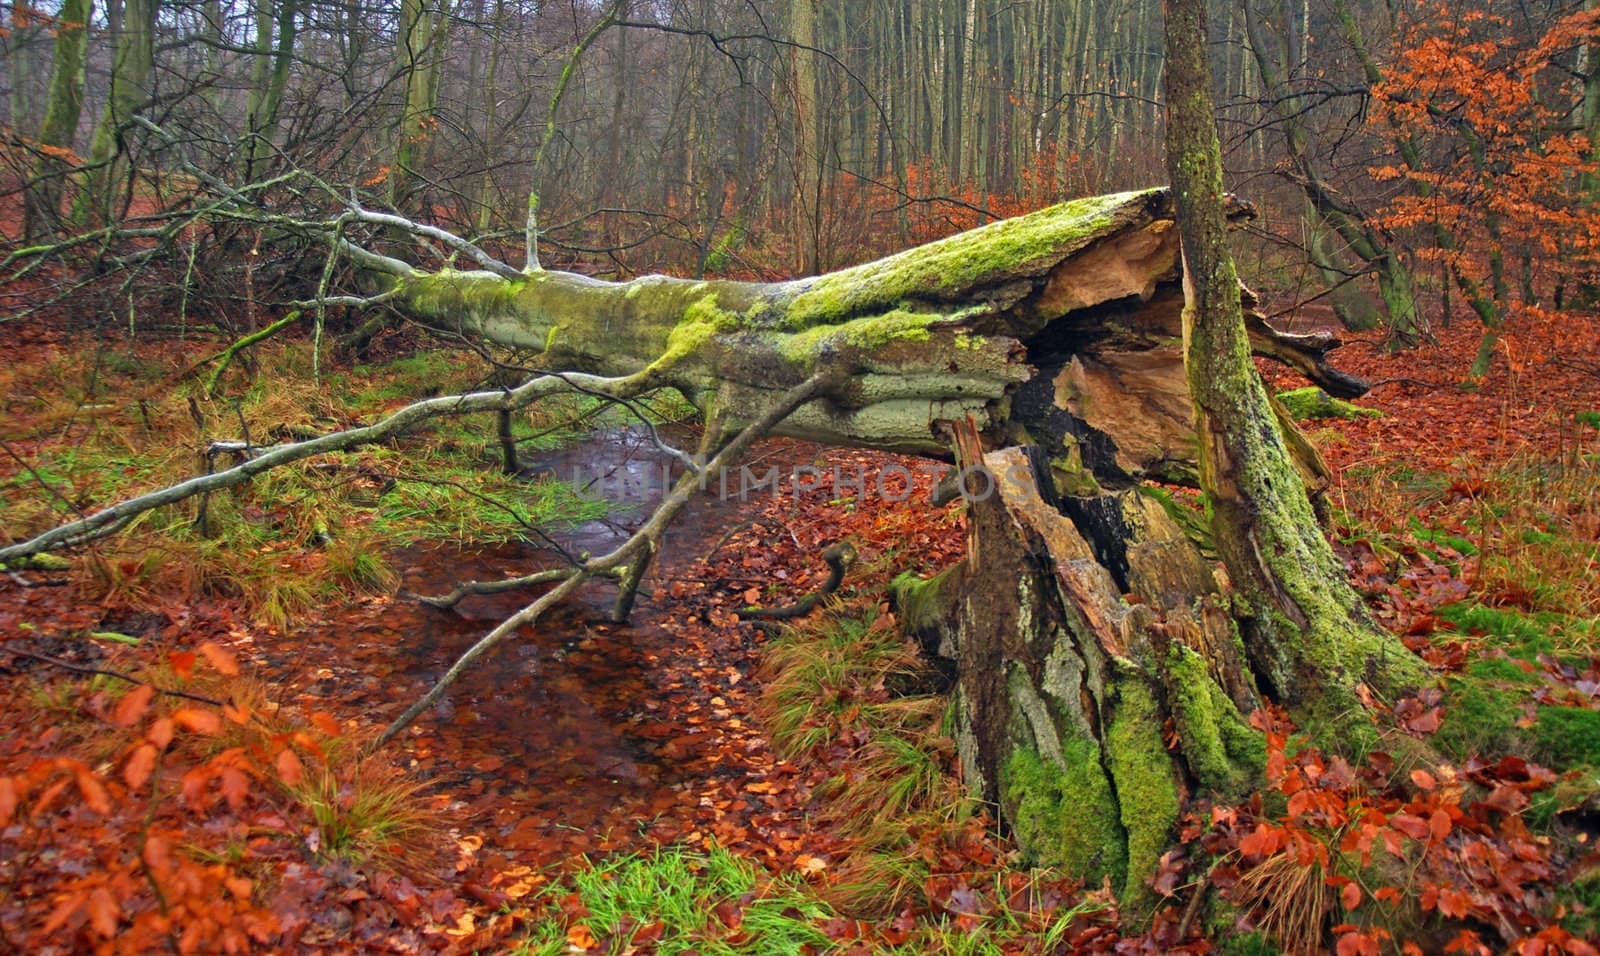 Fallen tree in autumn by baggiovara